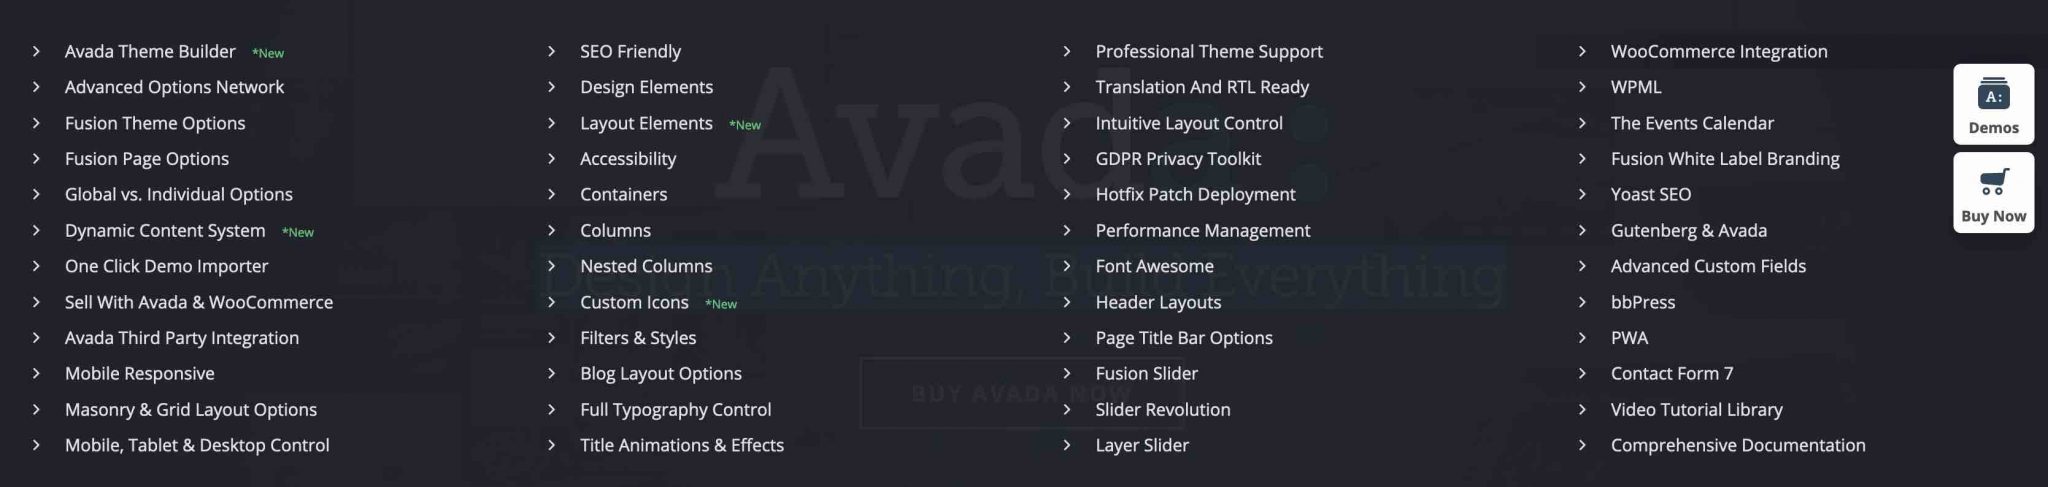 Avada theme options list